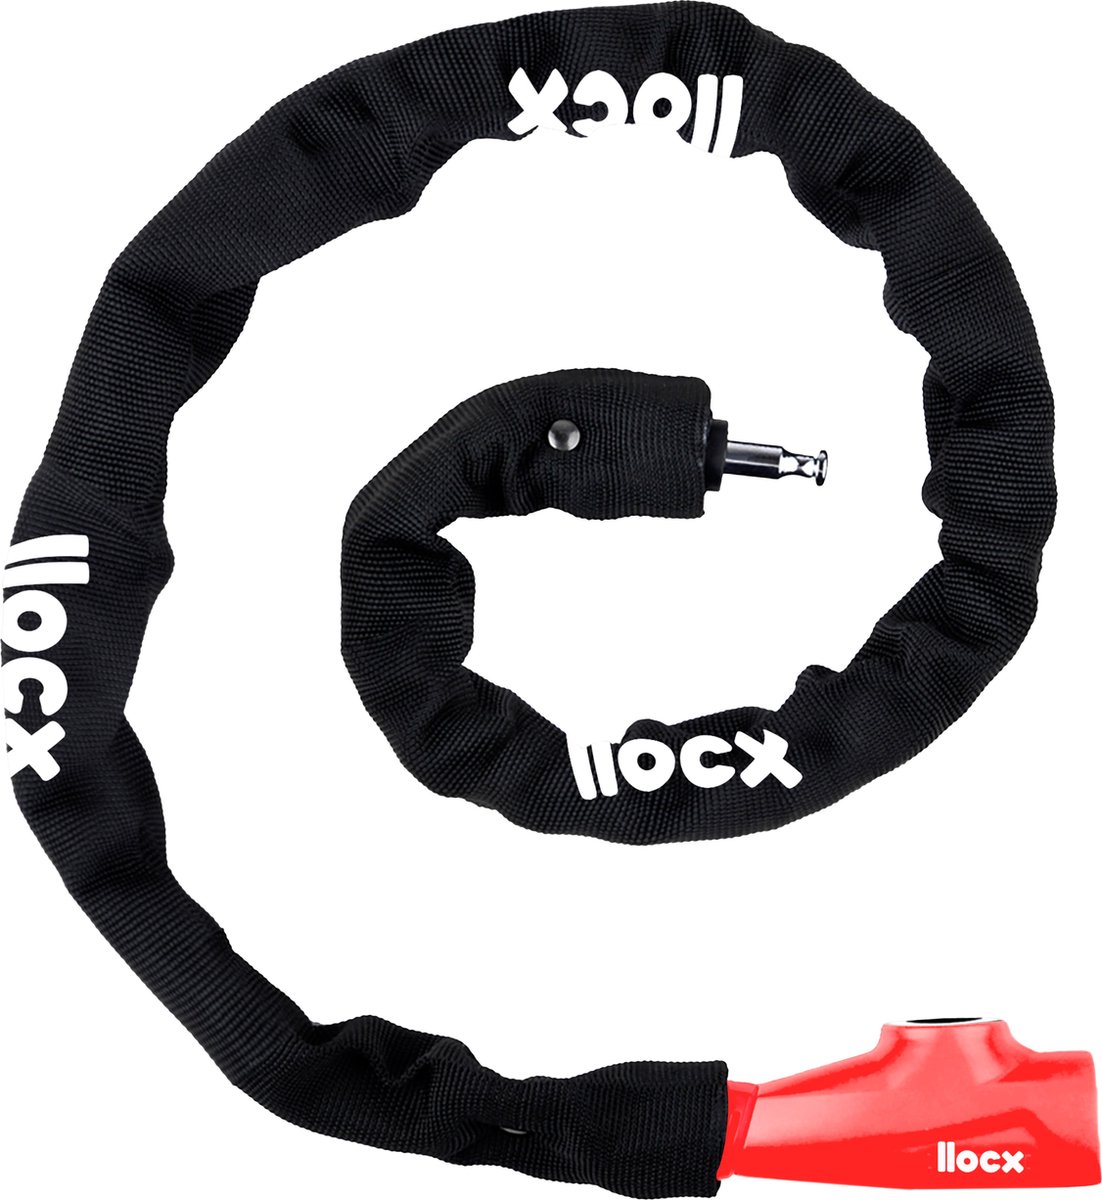 LLOCX Fiets Kettingslot - 1 meter met 2 Sleutels - Roestvrij Aluminium 6mm - Sluiting zonder Sleutel - Rode Kliksluiting - Krasvrije Sleeve